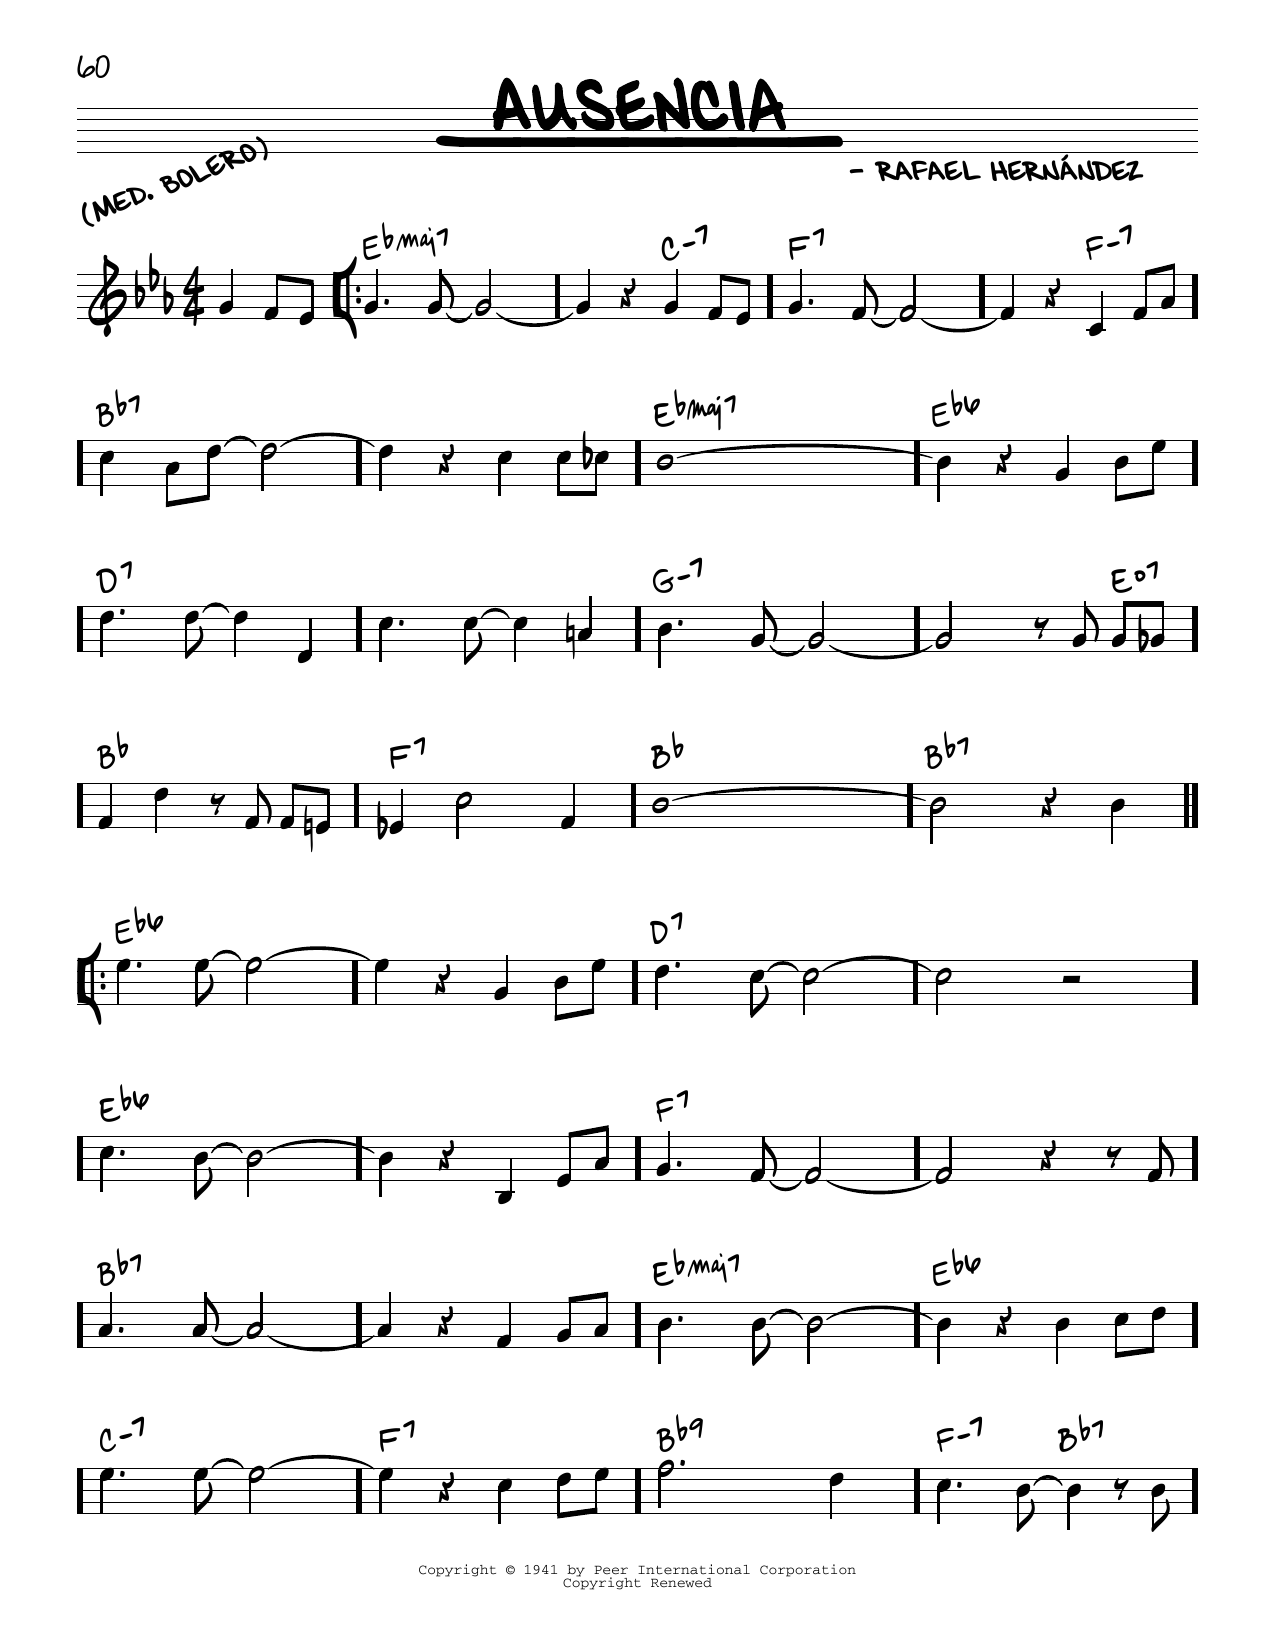 Rafael Hernandez Ausencia Sheet Music Notes & Chords for Real Book – Melody & Chords - Download or Print PDF